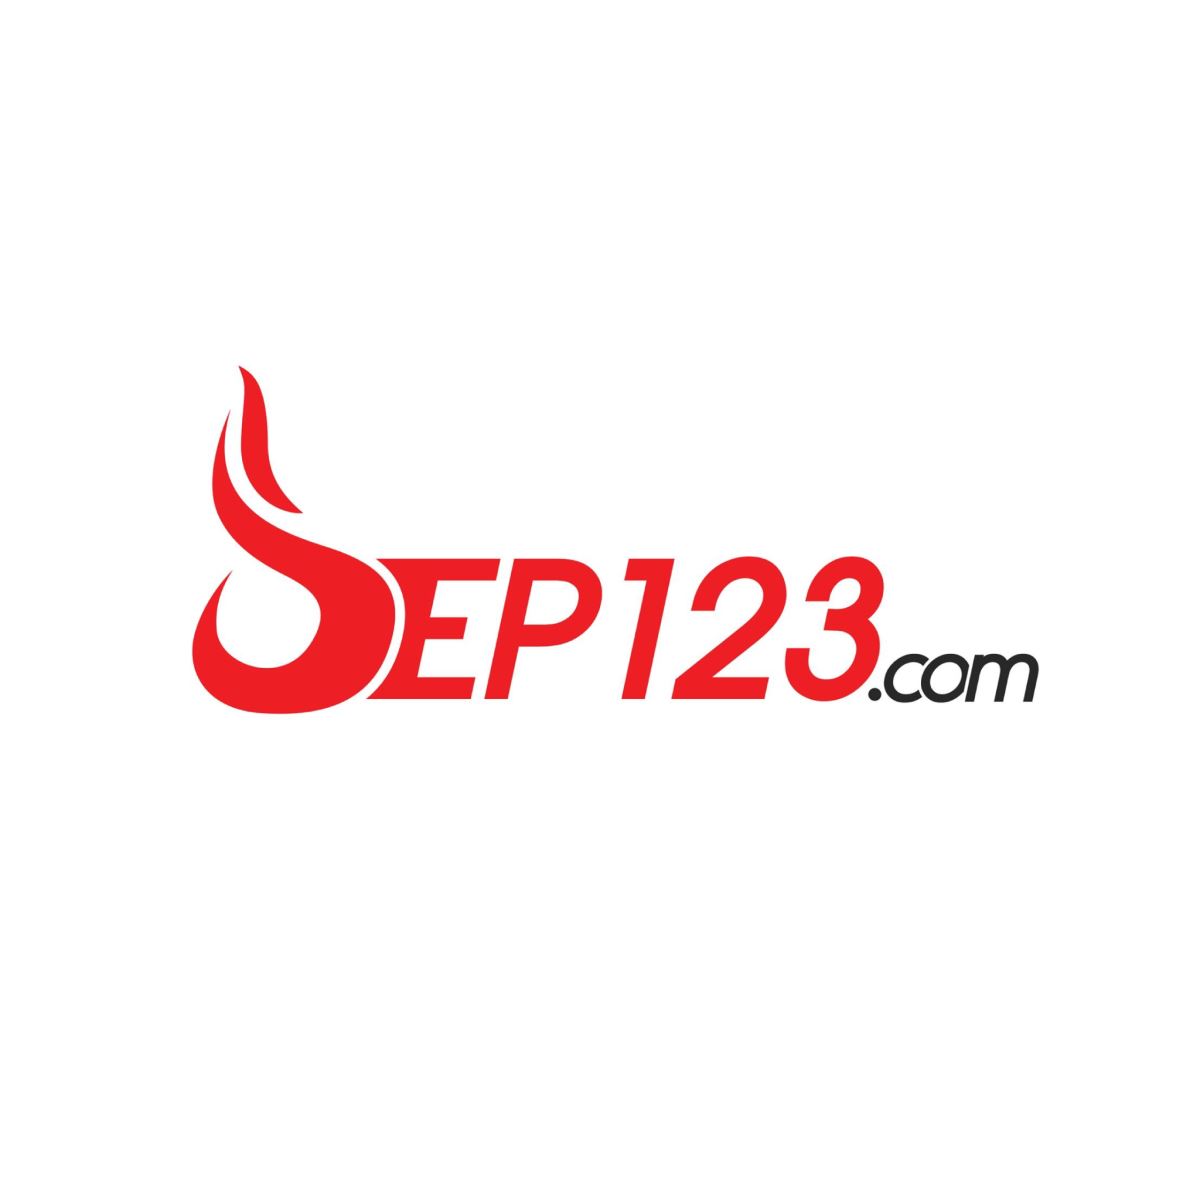 Logo123.com - Crunchbase Company Profile & Funding